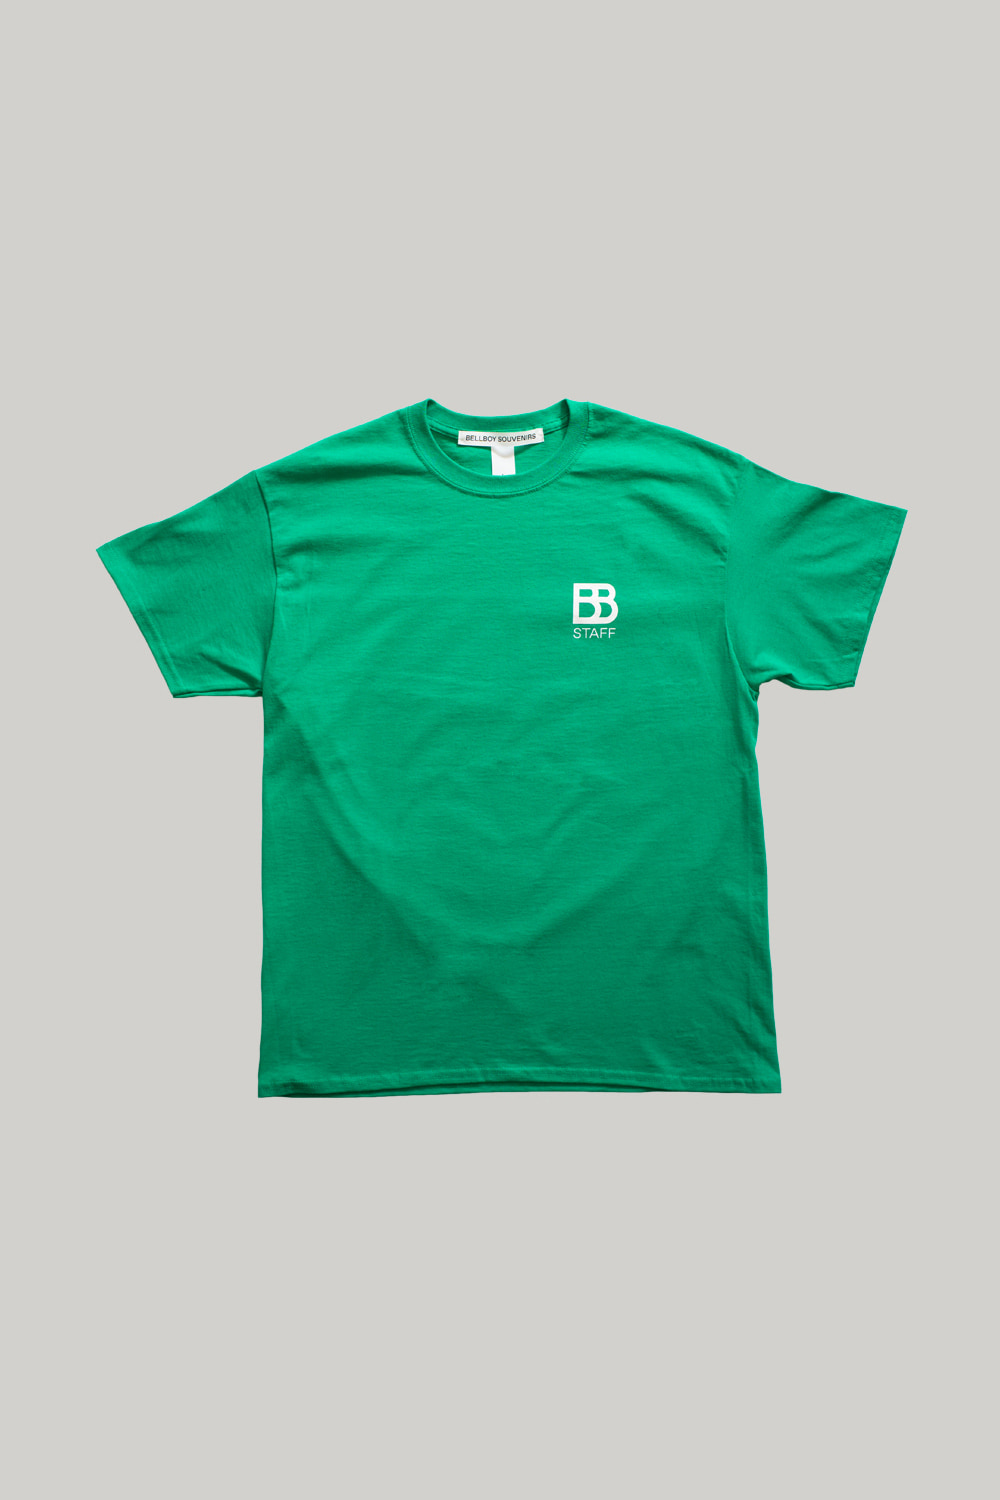 BELLBOY Staff T-Shirts - Kelly Green 티셔츠, 워시드 헤비웨이트 티셔츠, 옥스포드셔츠, 버튼다운셔츠, 메신저백, 캔버스백